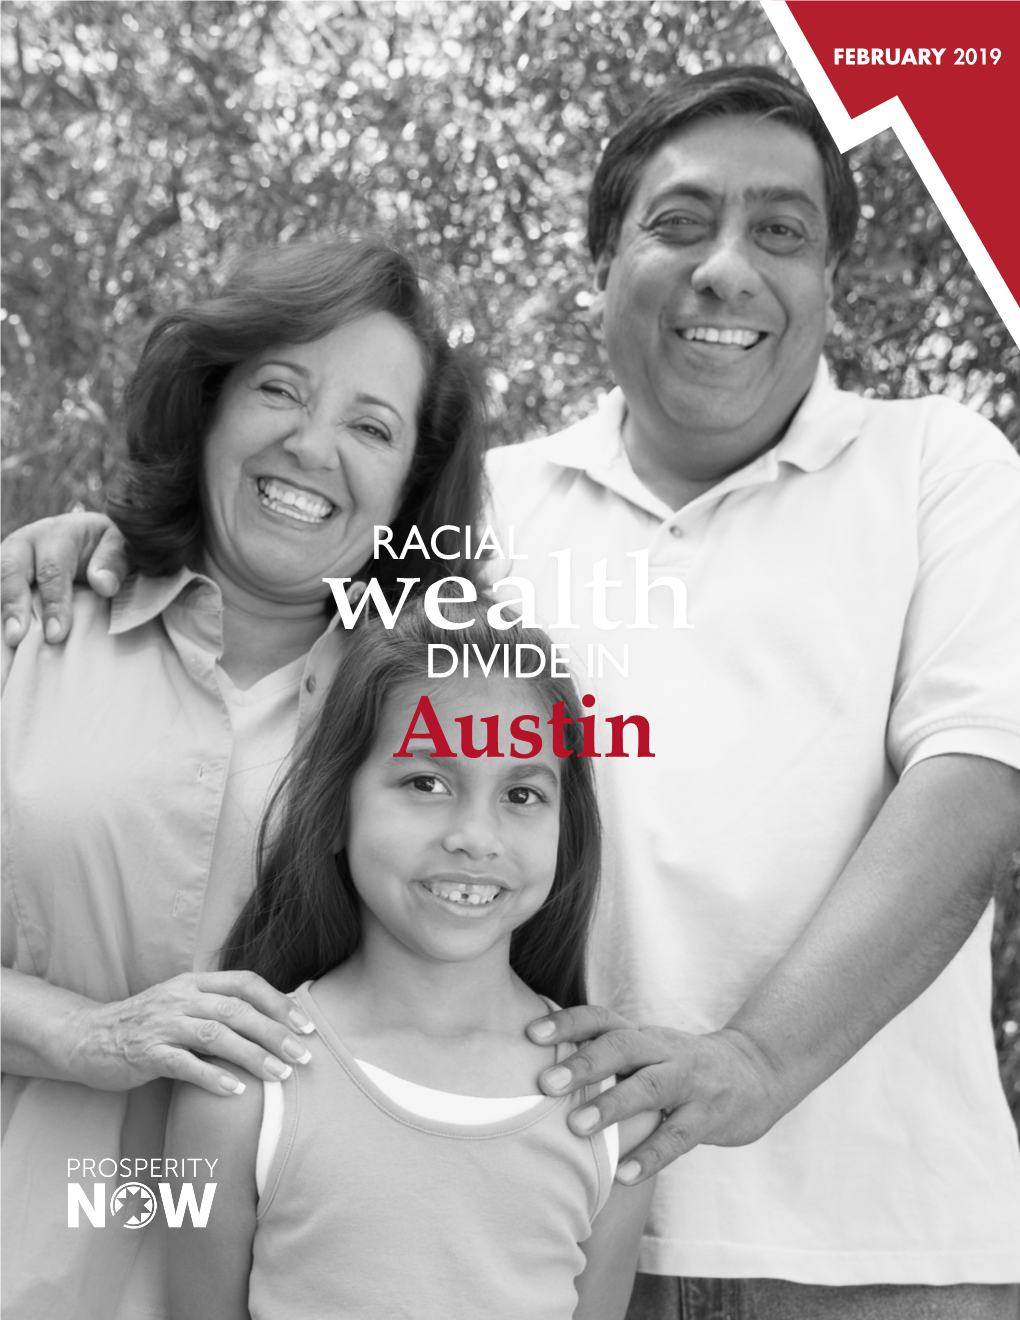 Racial Wealth Divide in Austin the Racial Wealth Divide in Austin, TX